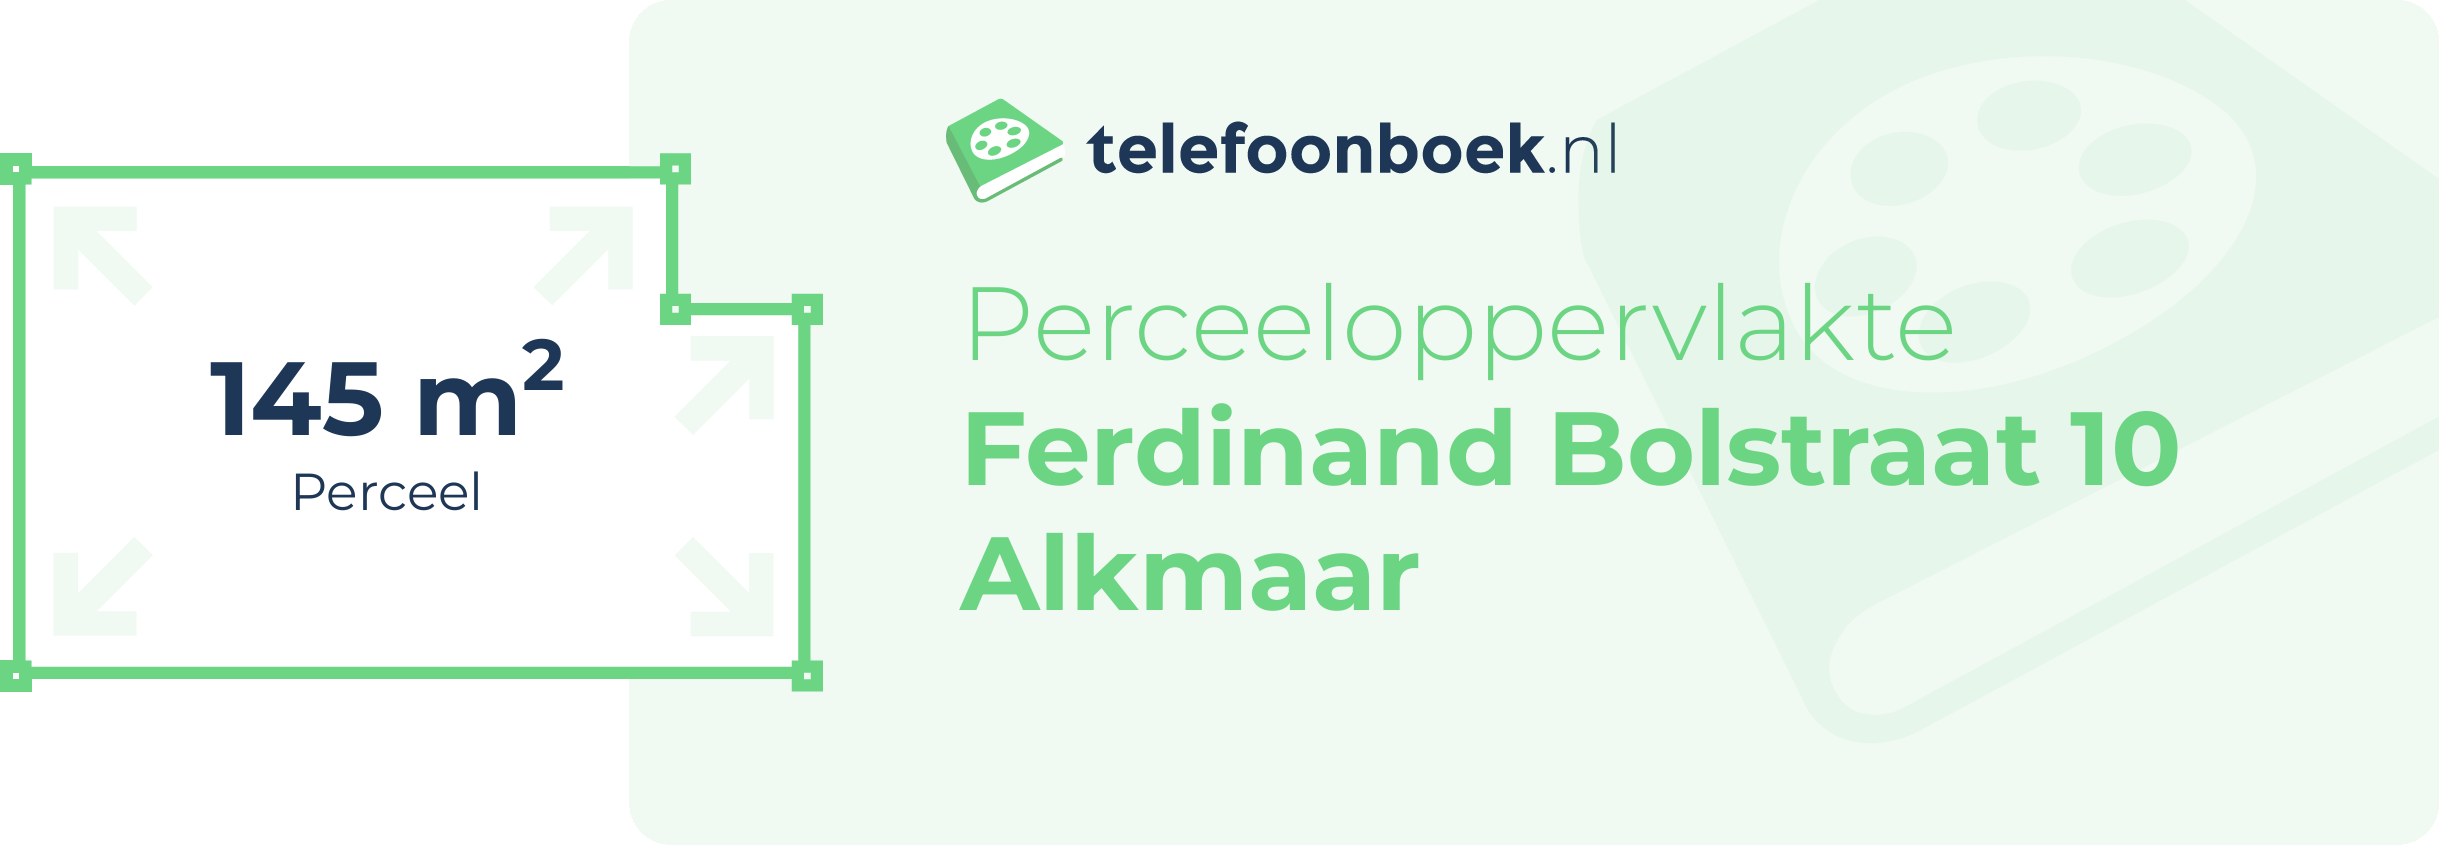 Perceeloppervlakte Ferdinand Bolstraat 10 Alkmaar